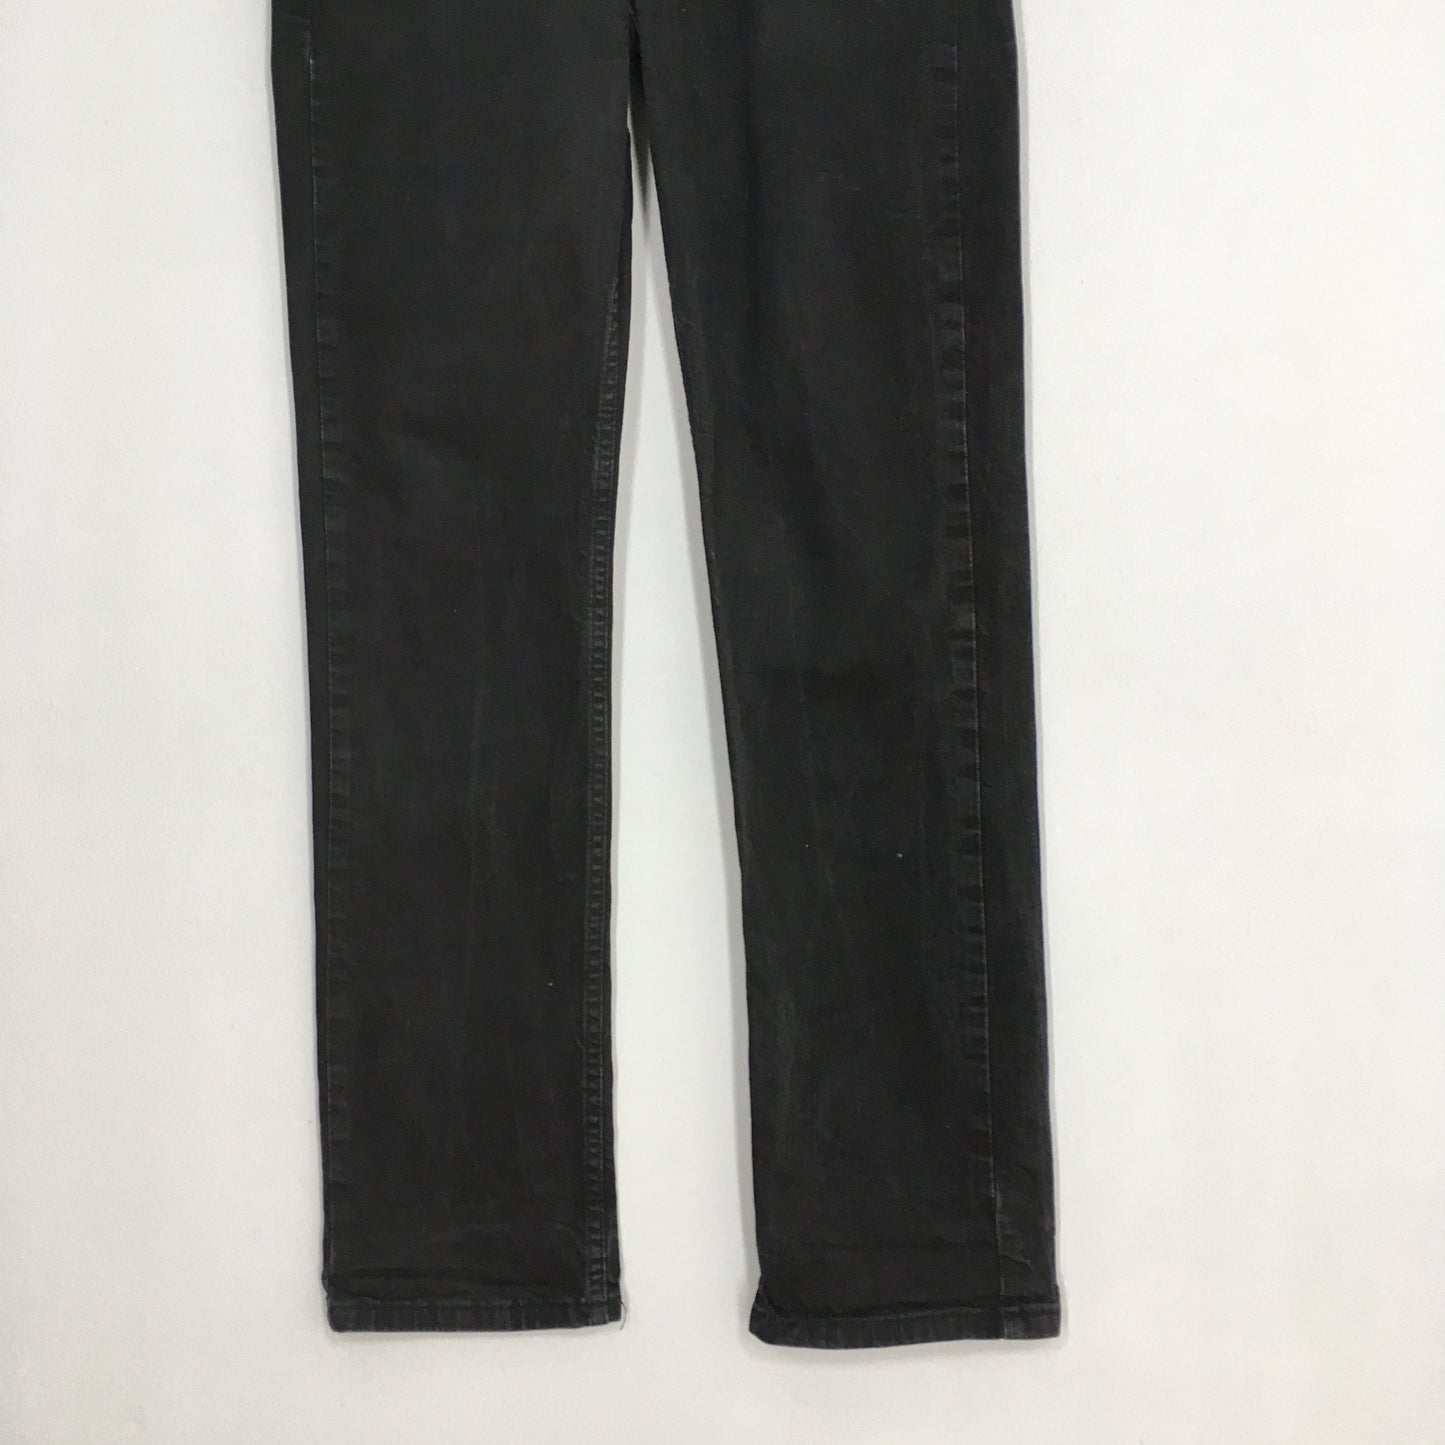 Levi's 514 Super Black Light Washed Jeans Size 30x33